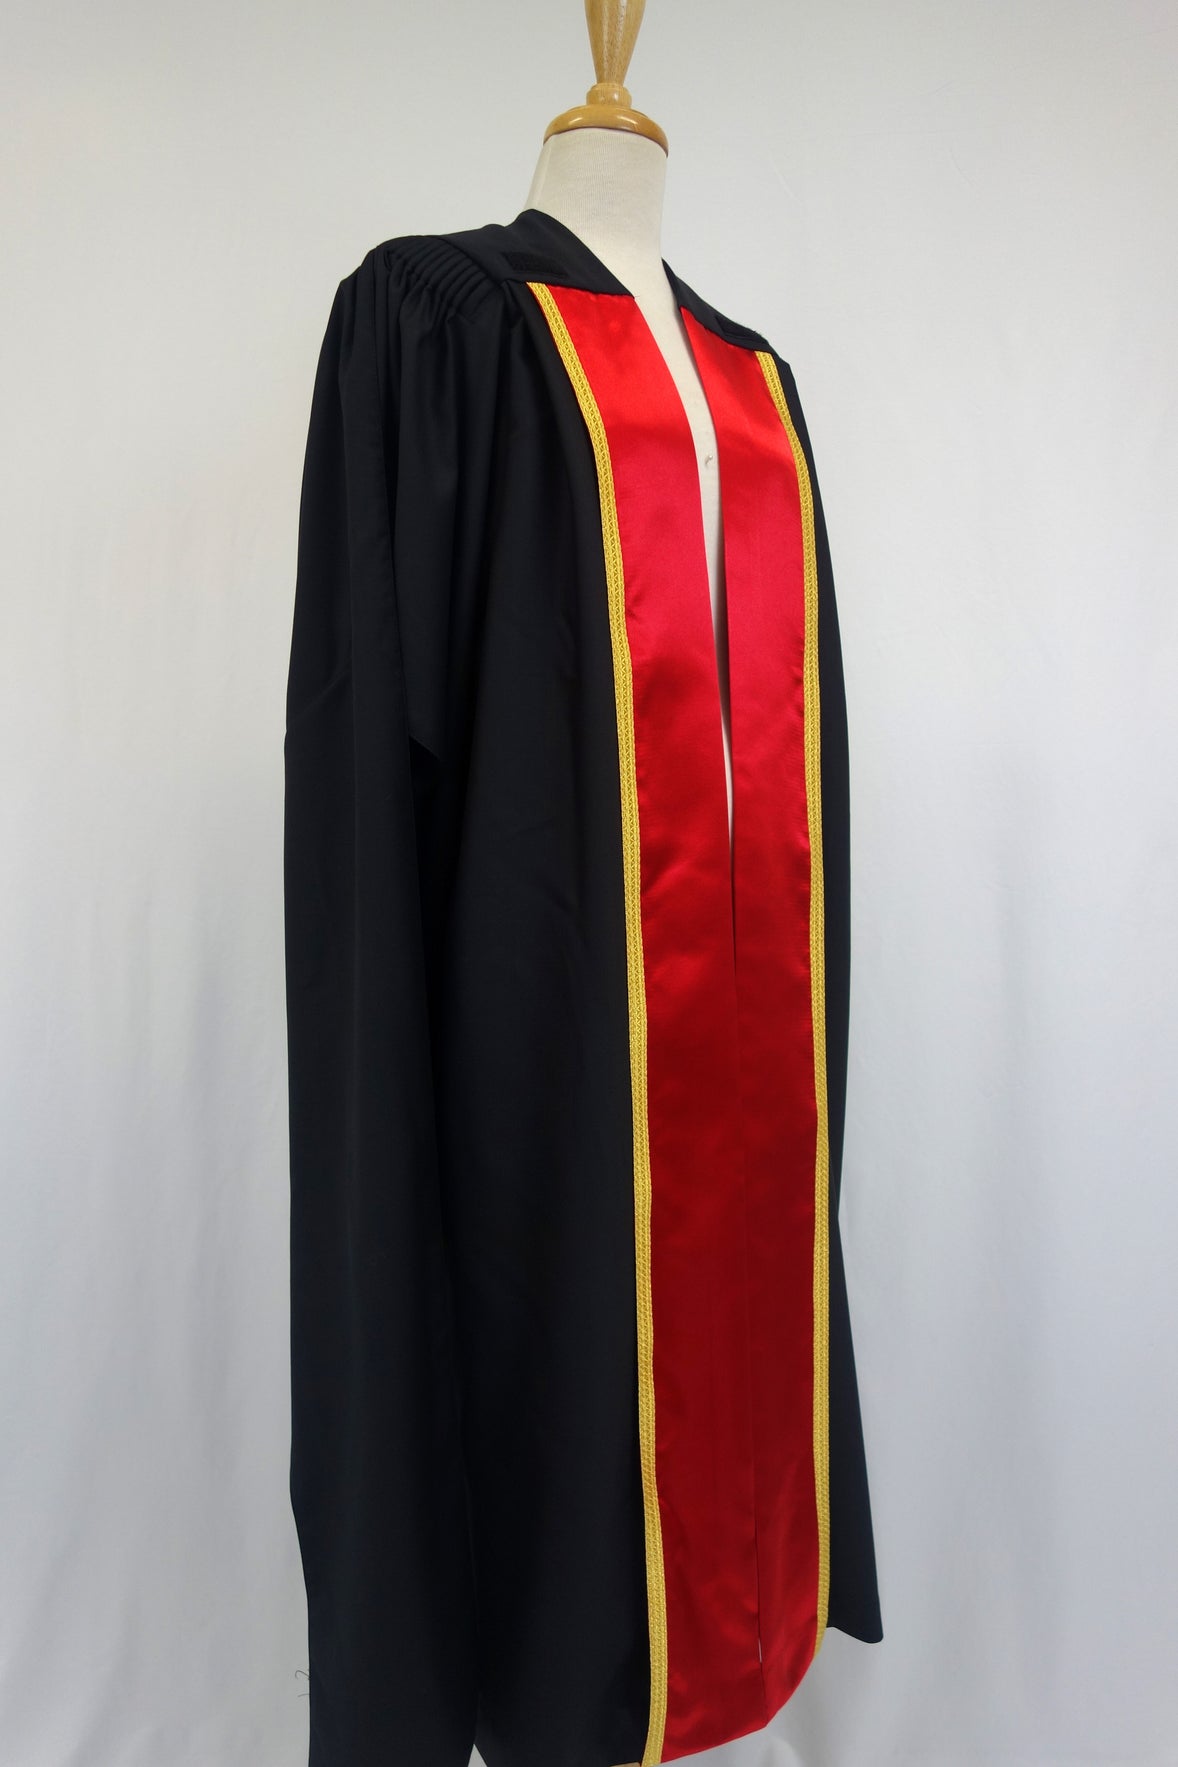 UWA PhD Graduation Gown Set - Gown, Hood and Bonnet